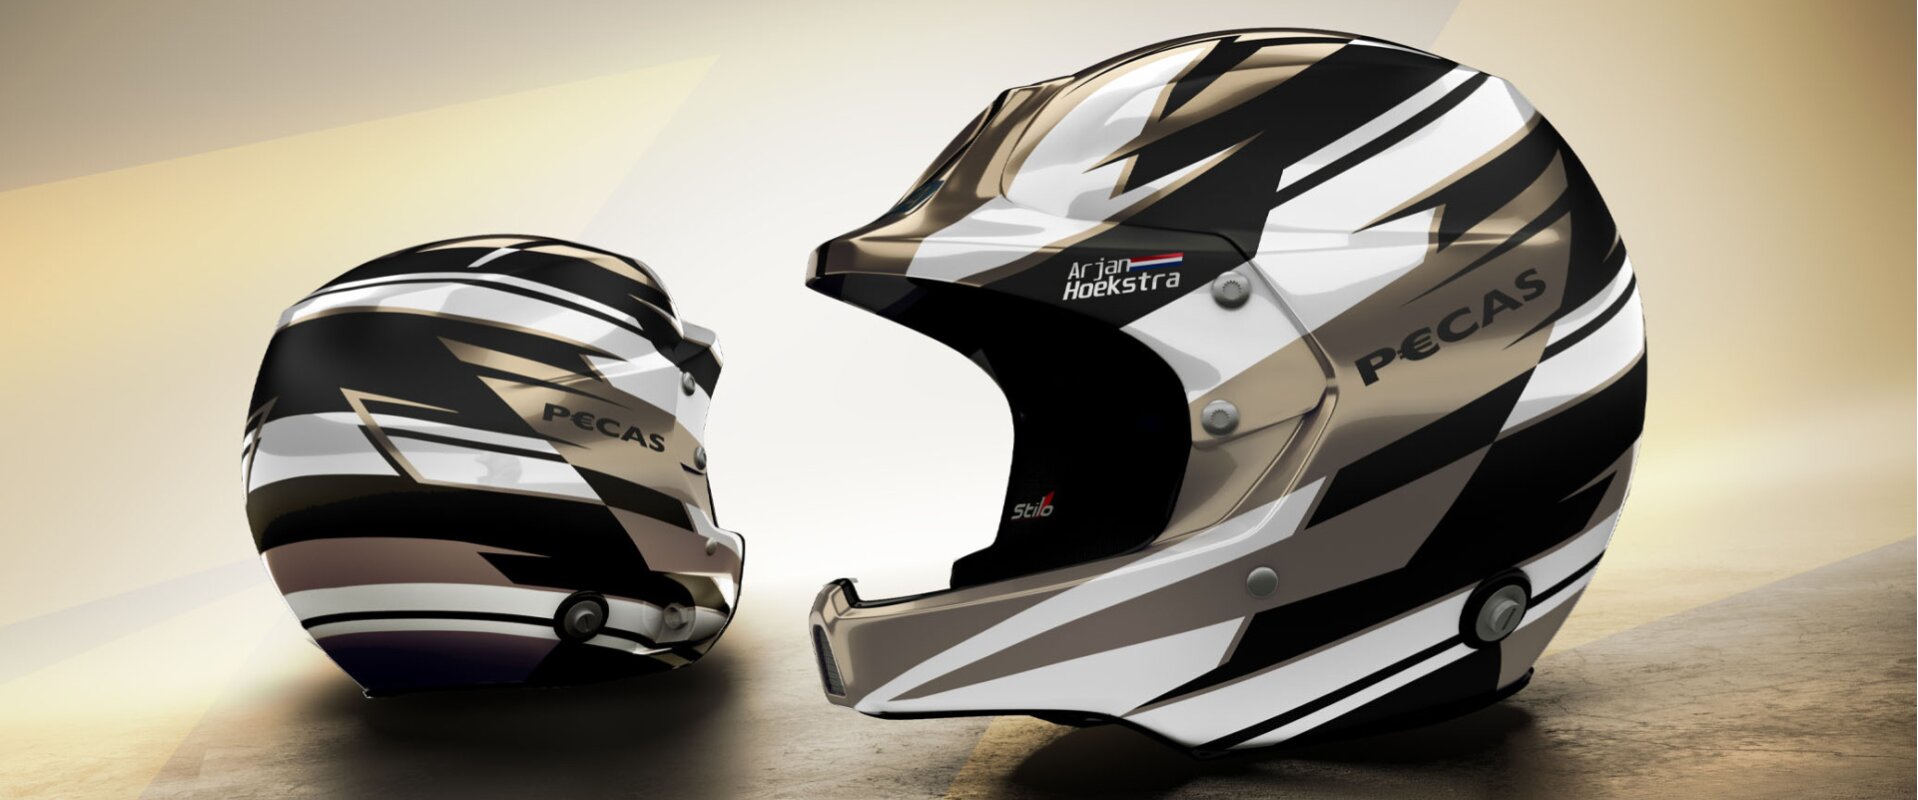 f1 helmet design idea concept